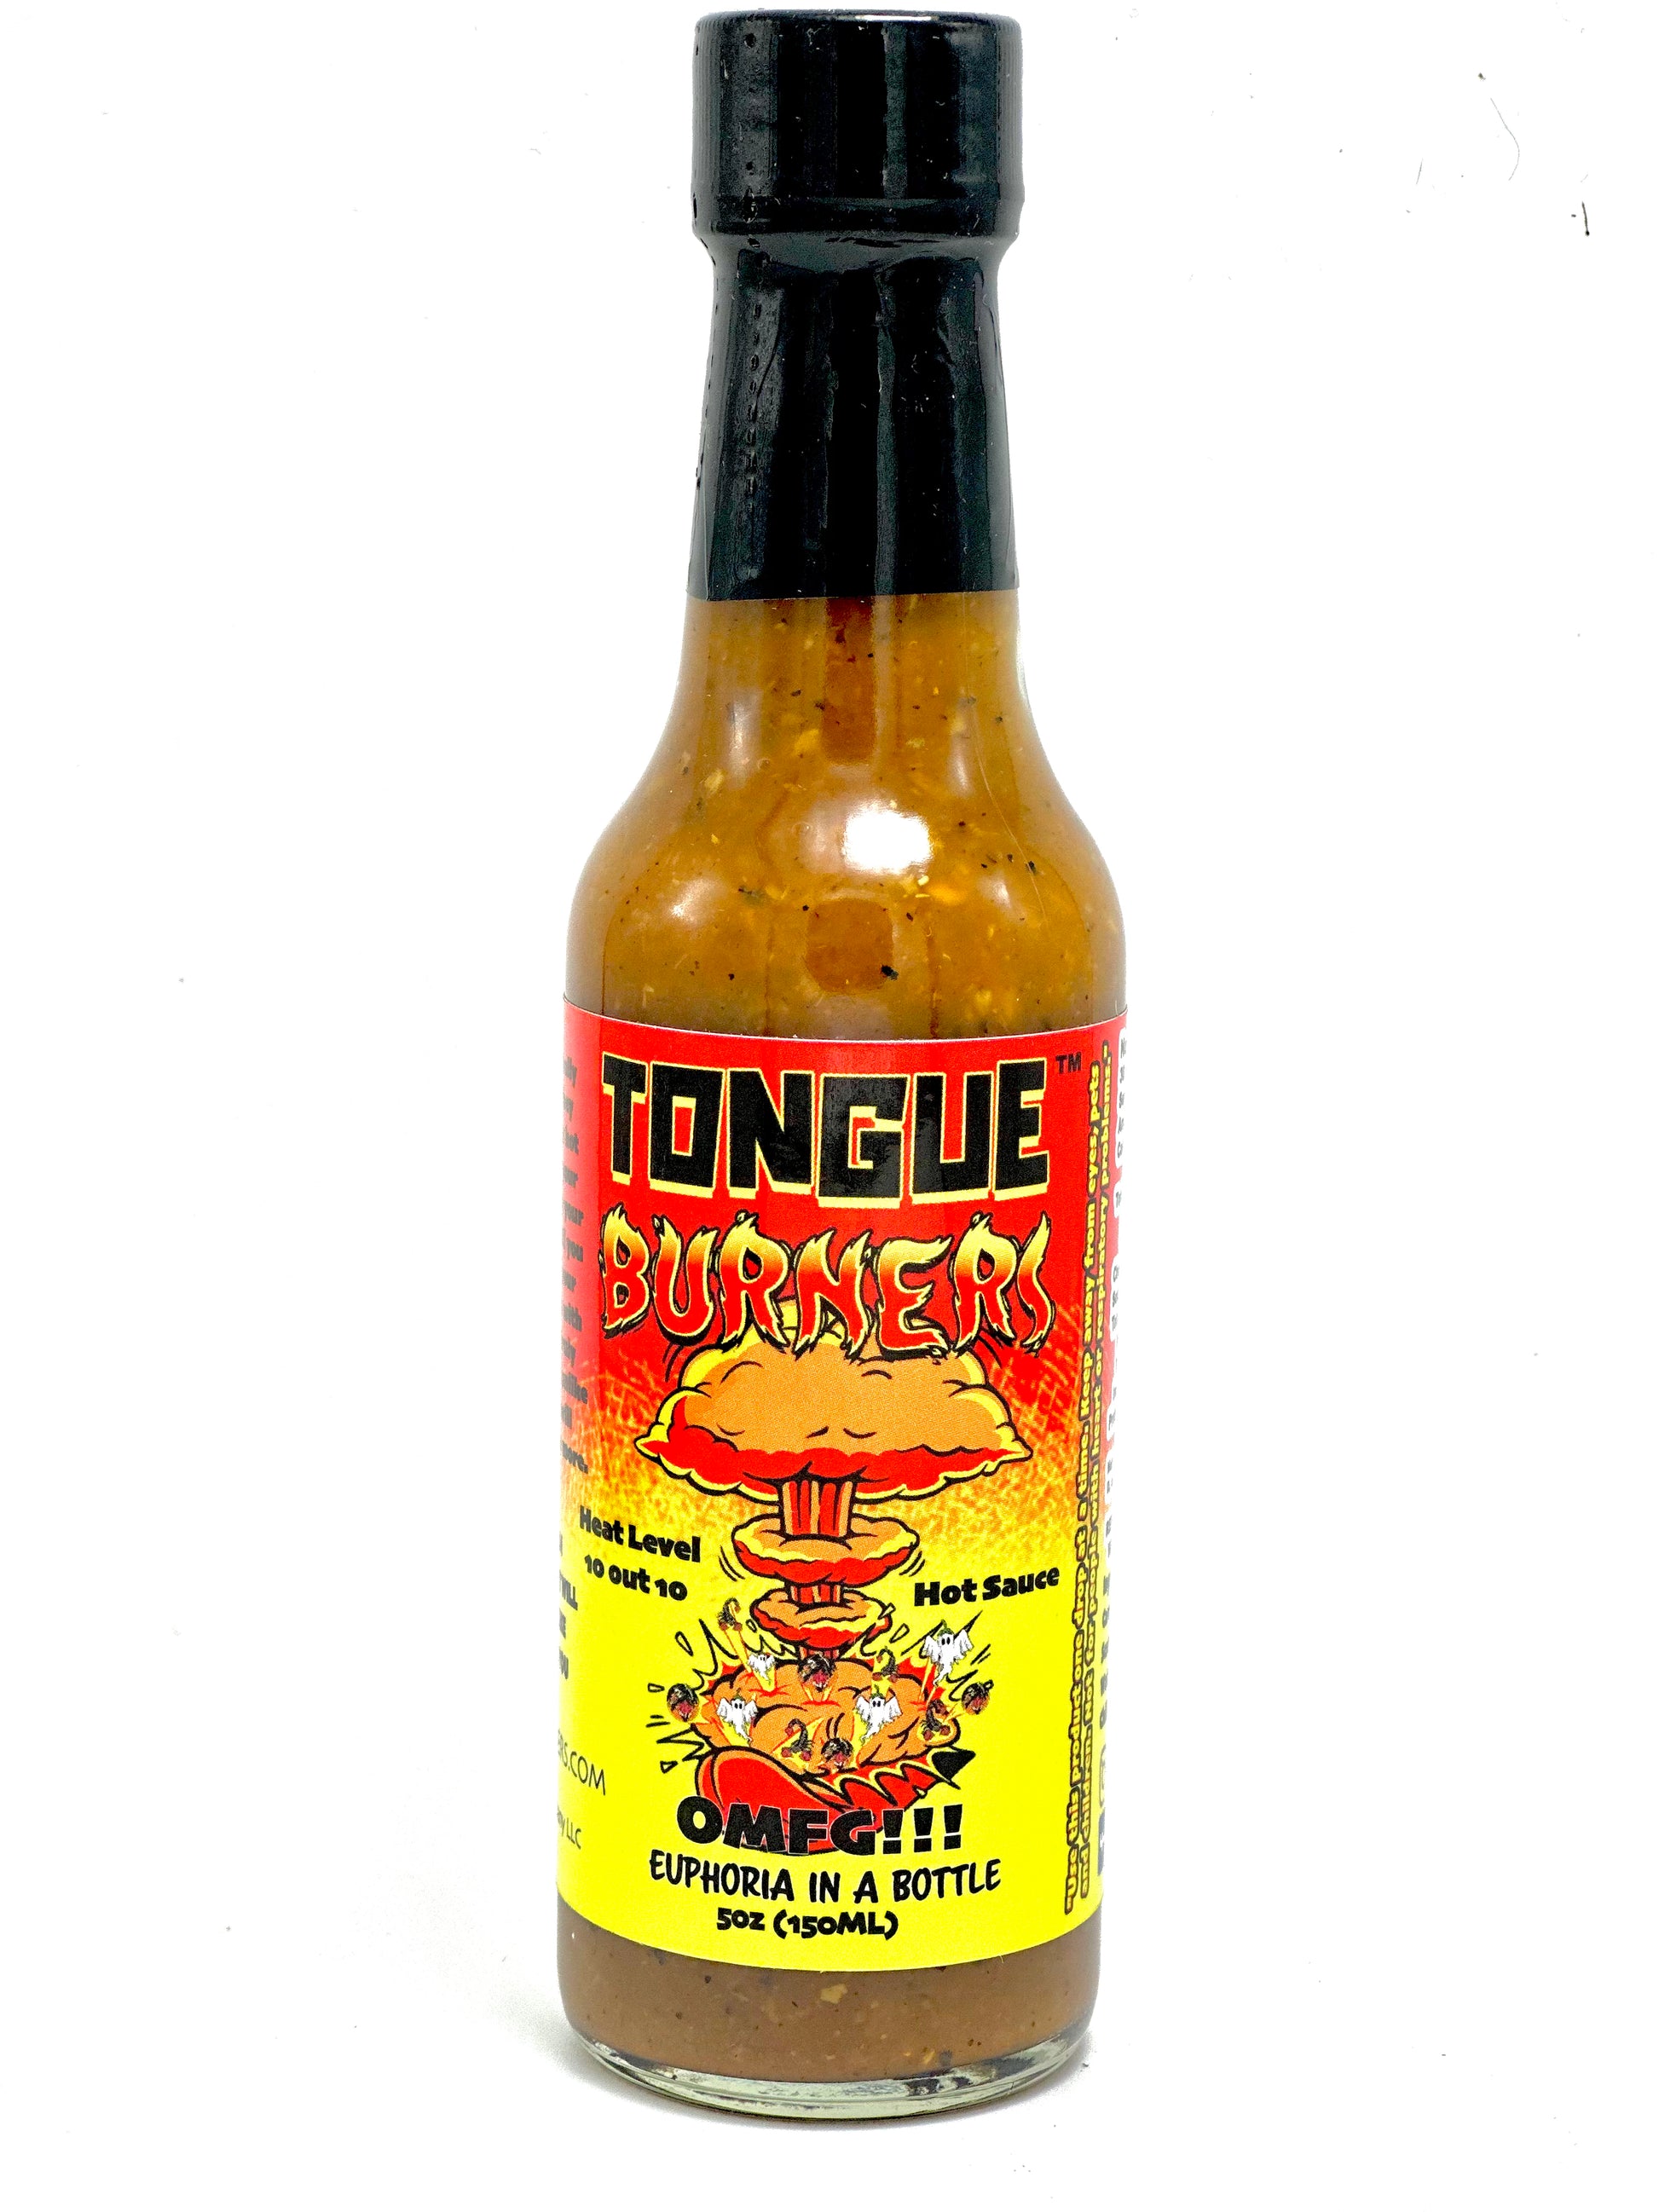 OMFG!!! Hot Sauce, Euphoria In A Bottle┋Tongue Burners Hot Sauce fl 5oz - Tongue Burners Hot Sauce